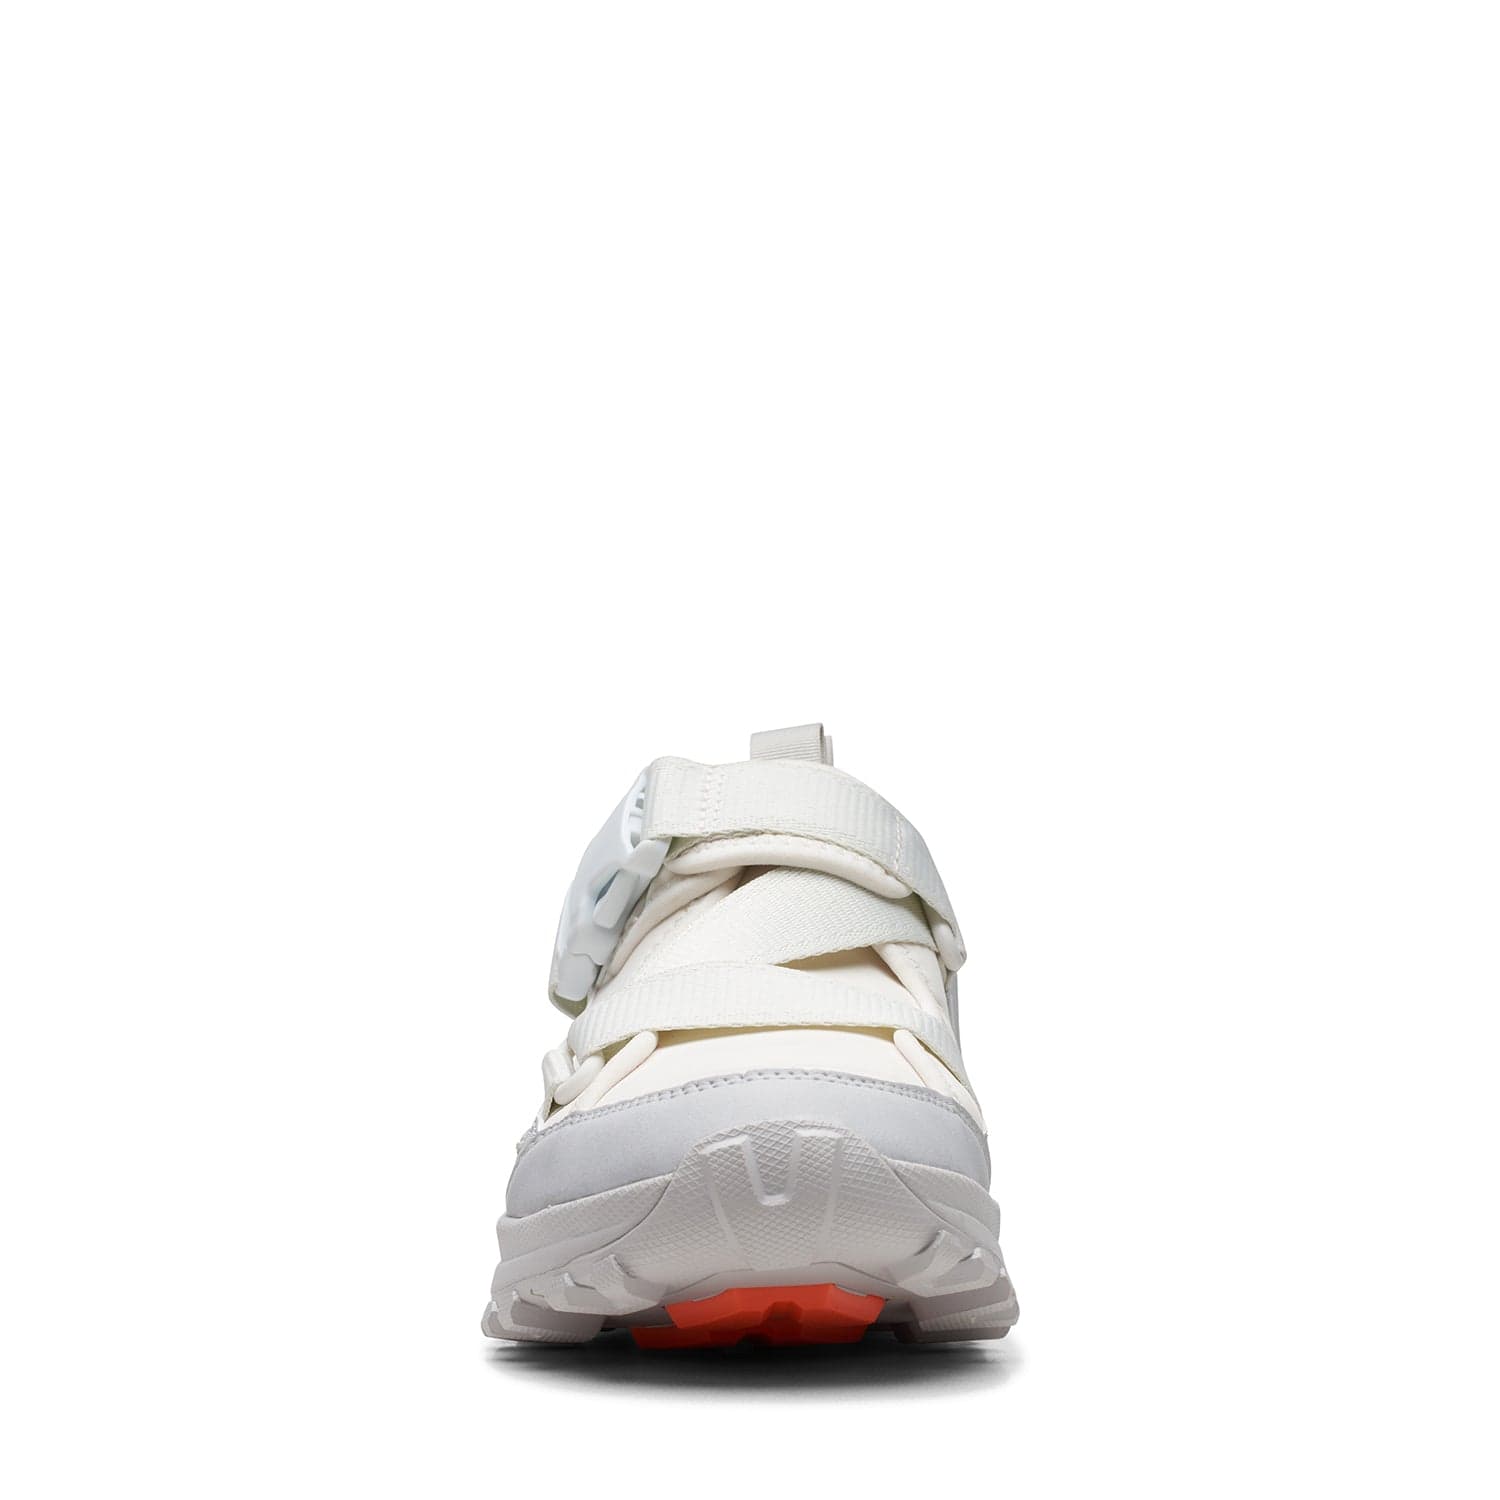 Clarks Atltrek Strap - Shoes - Light Grey Combi - 261705804 - D Width (Standard Fit)